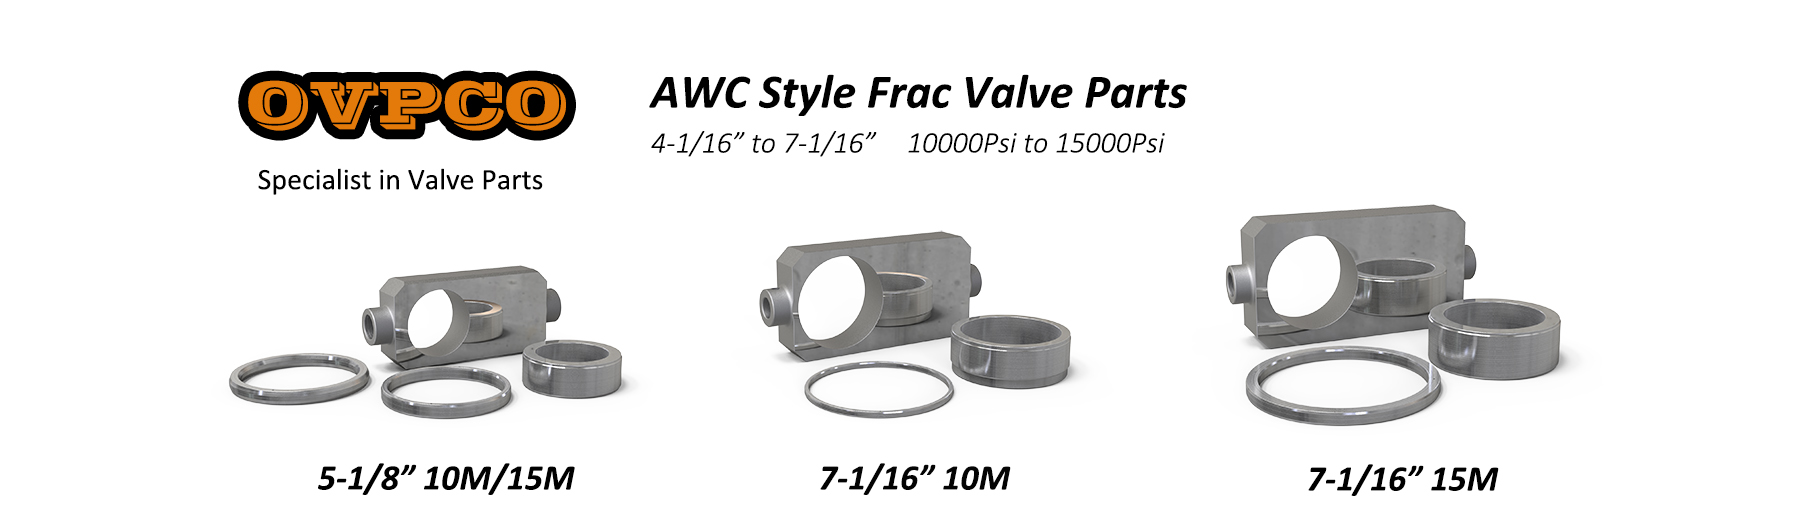 AWC Frac Valve Parts